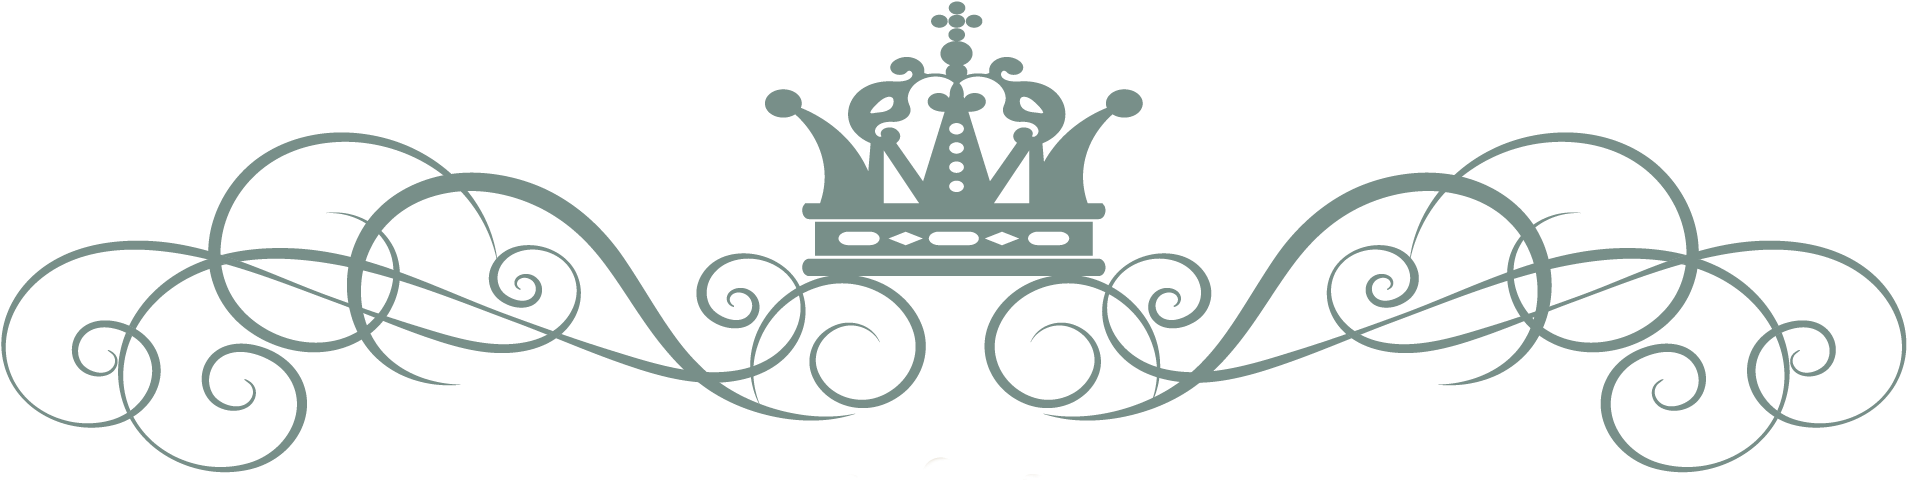 Crown Royal Brand Logo PNG